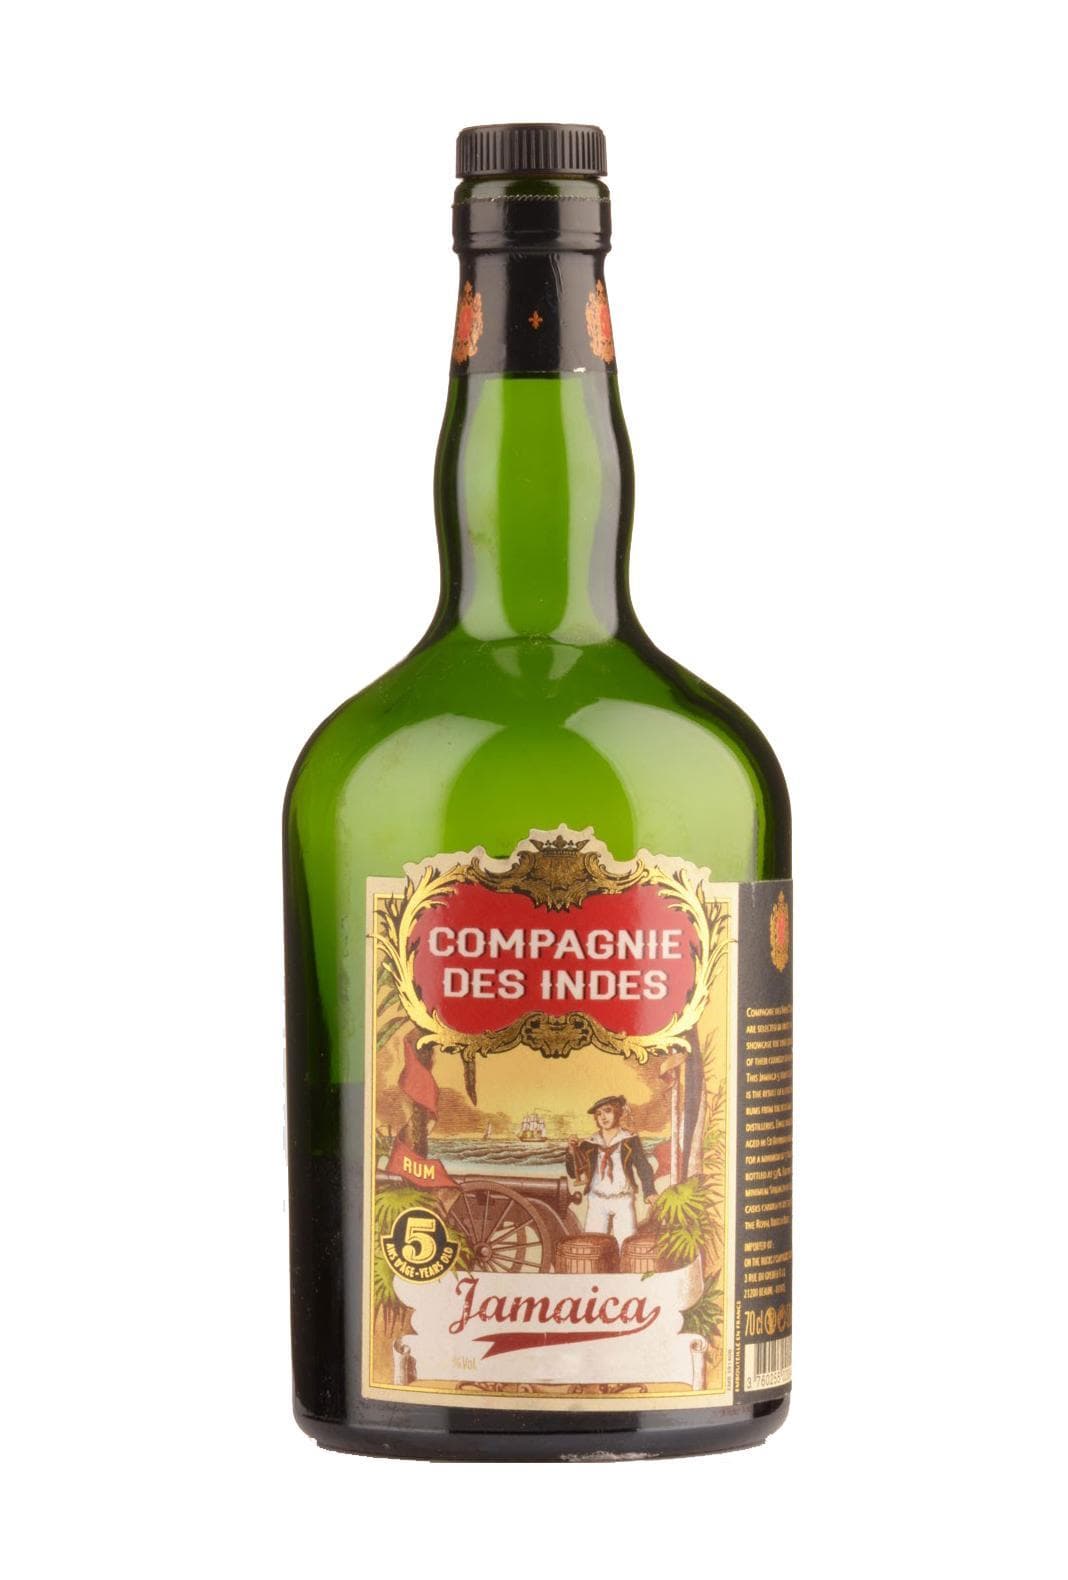 Compagnie des Indes Rum Jamaica 5 years 43% 700ml | Rum | Shop online at Spirits of France